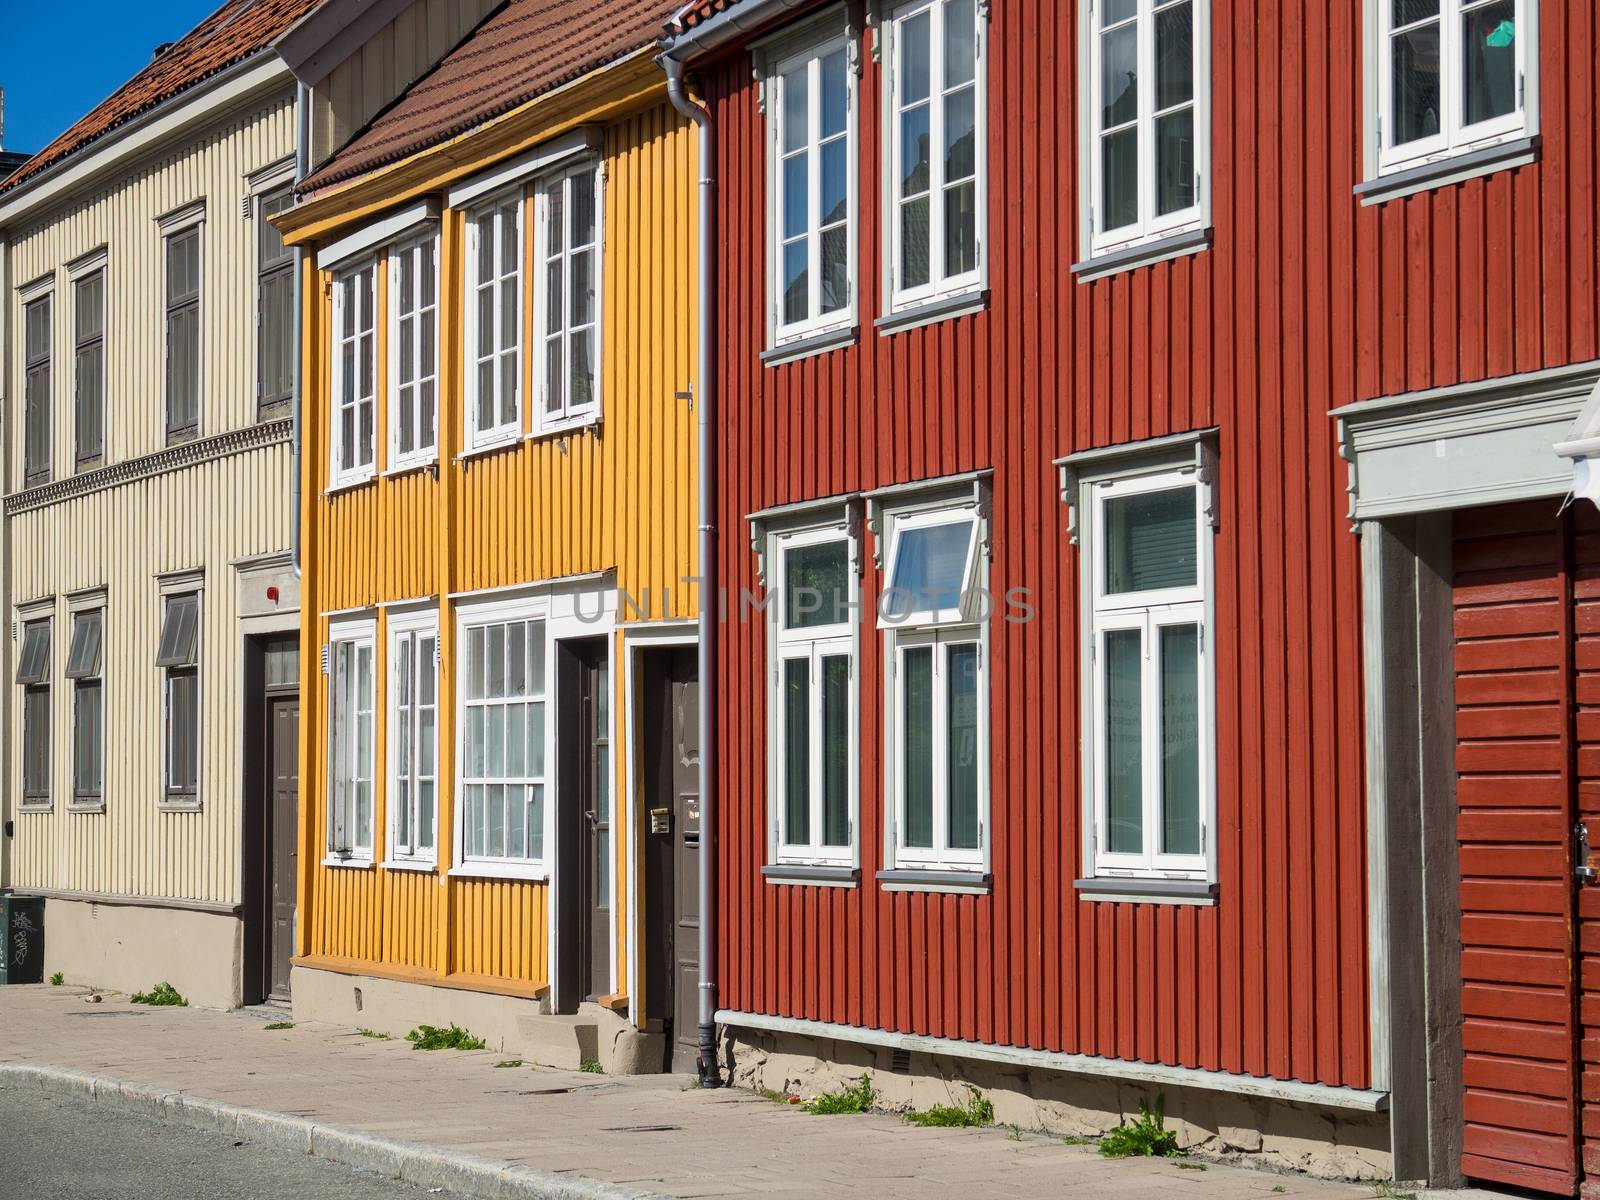 Wooden houses in Trondheim, Norway by epixx